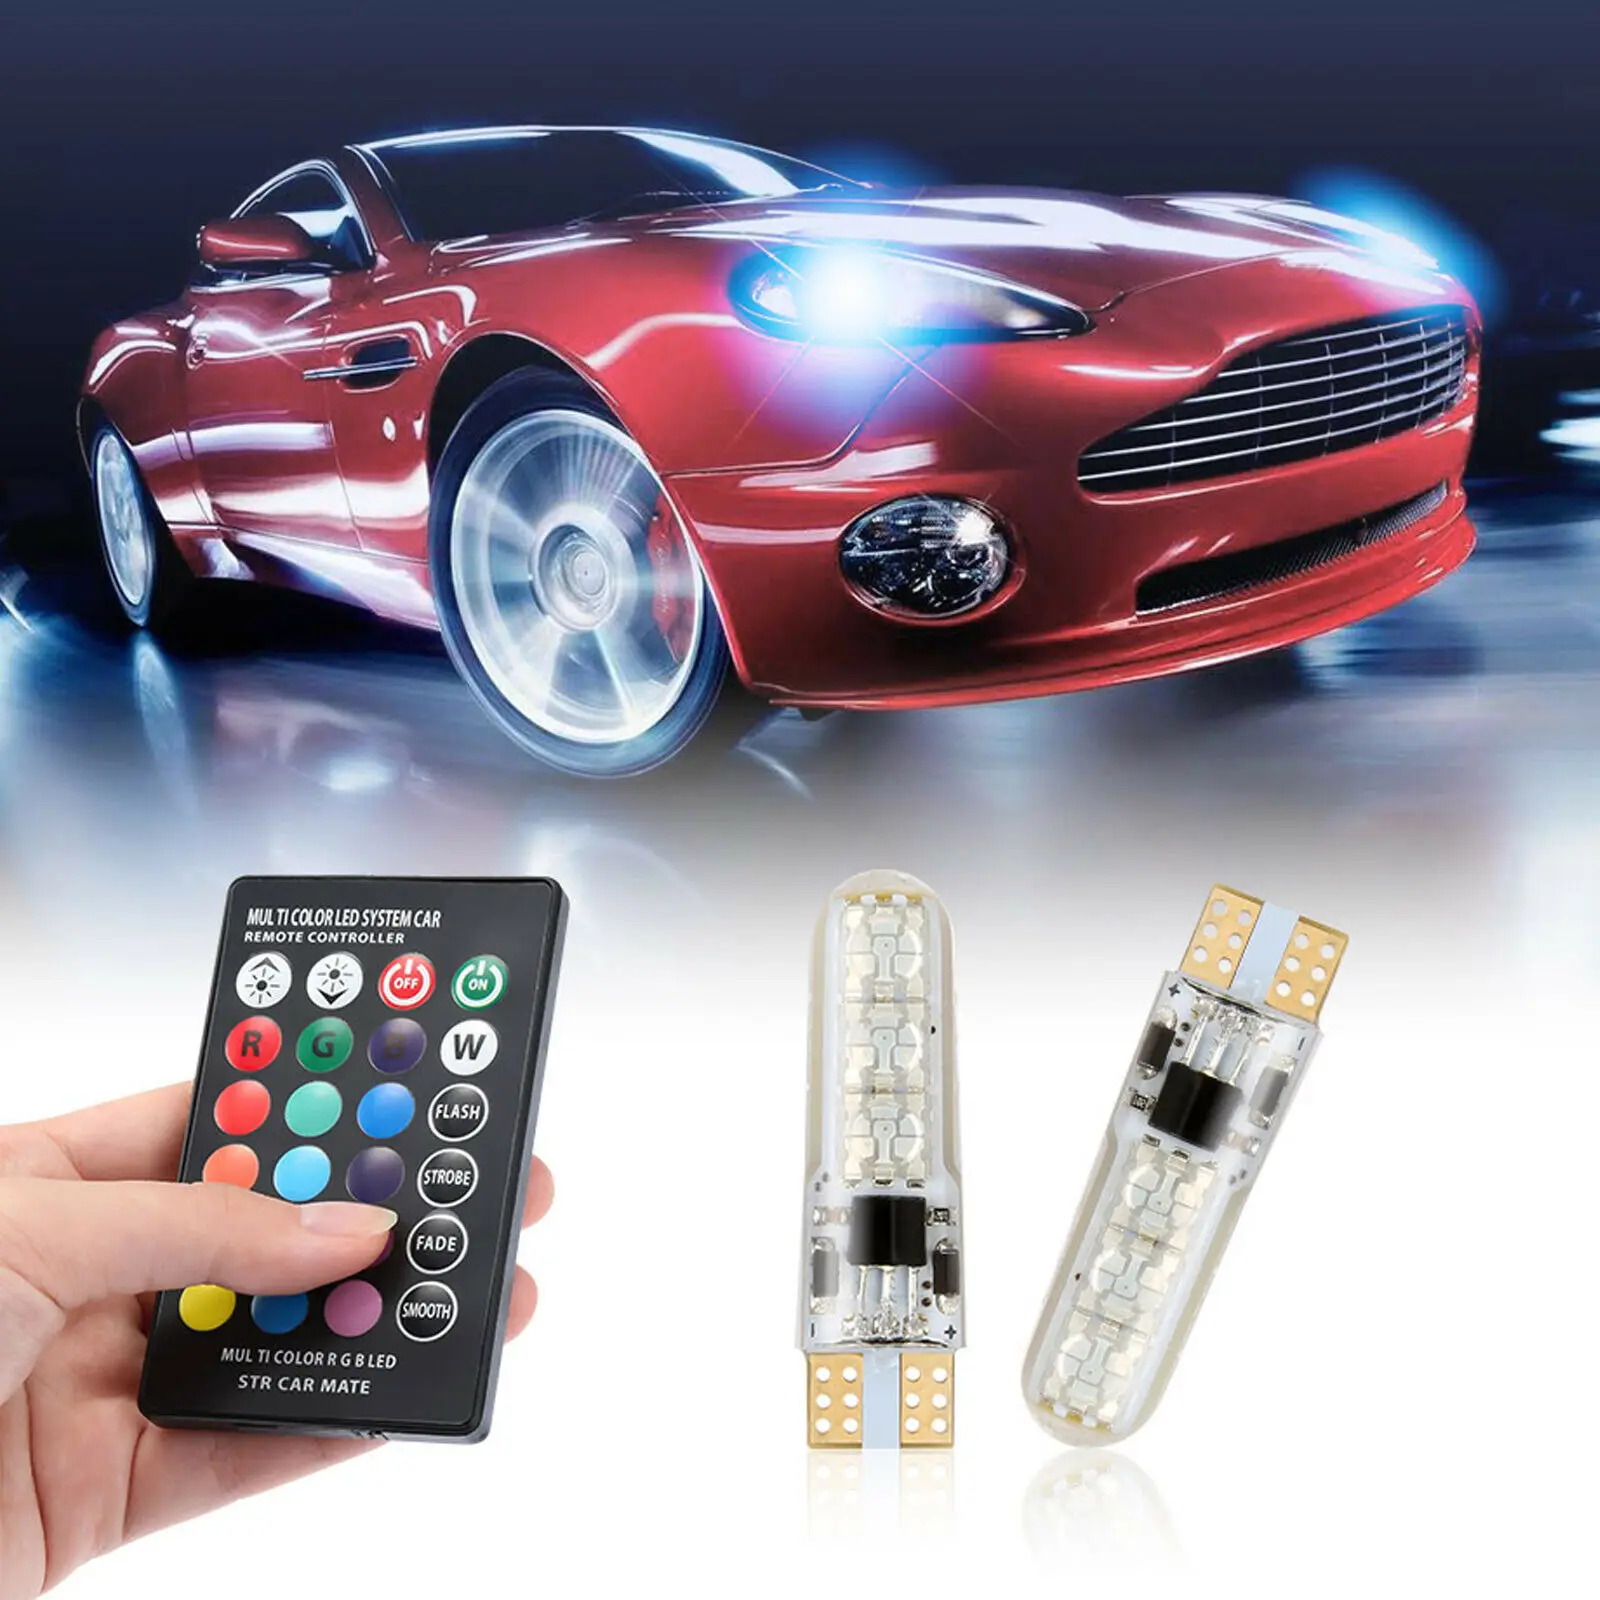 2X Wedge Light T10 W5W RGB LED Bulb DC12V 5050 6SMD Strobe Flash Car Interior Decorative Lights For Auto Remote Control Lighting